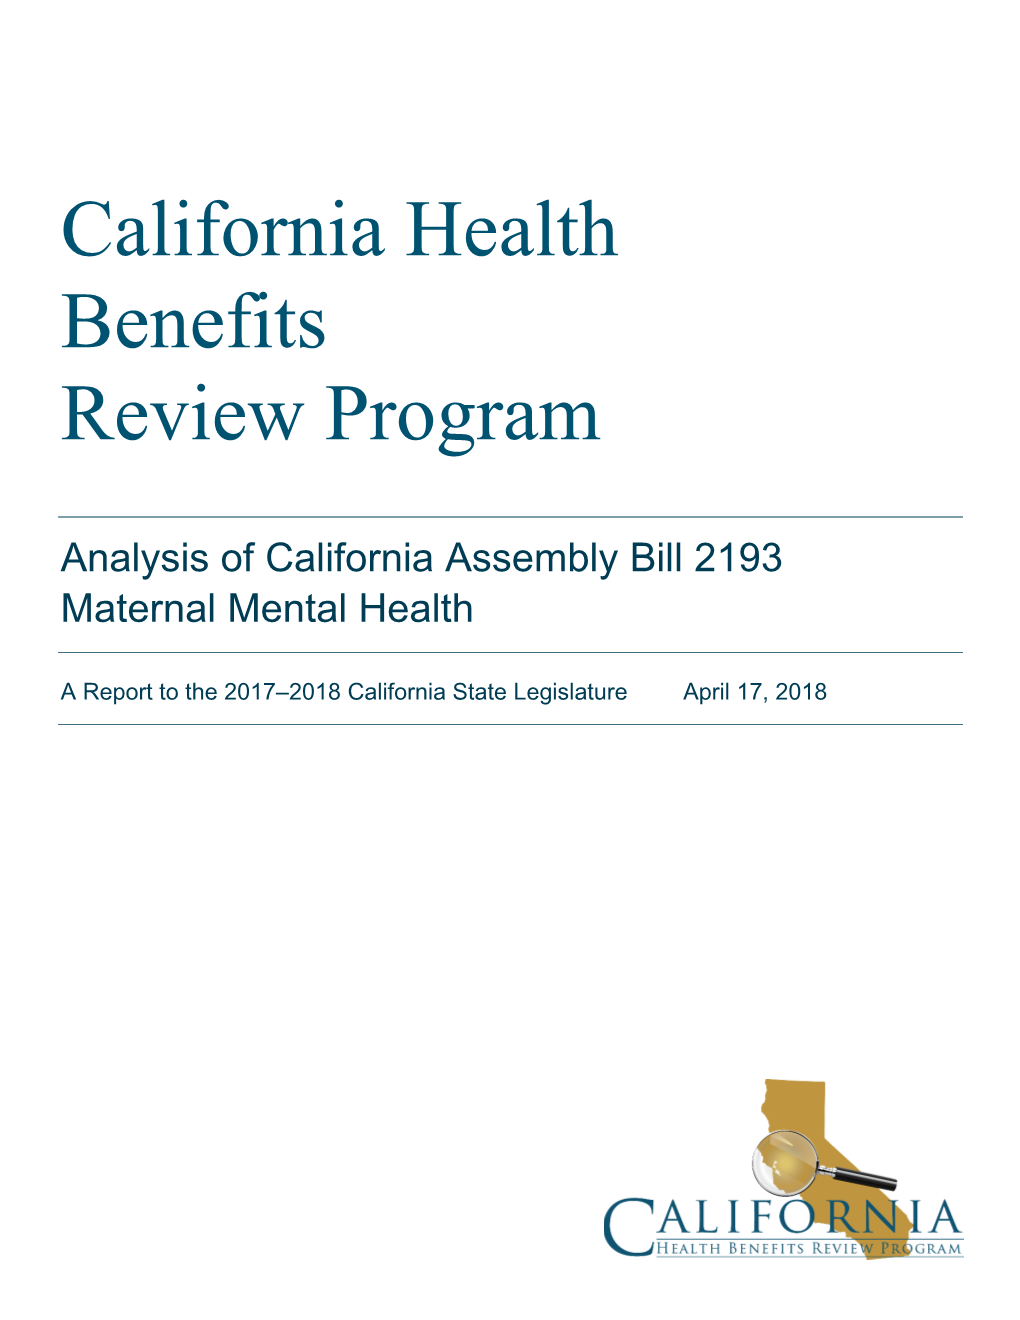 Analysis of California Assembly Bill 2193 Maternal Mental Health